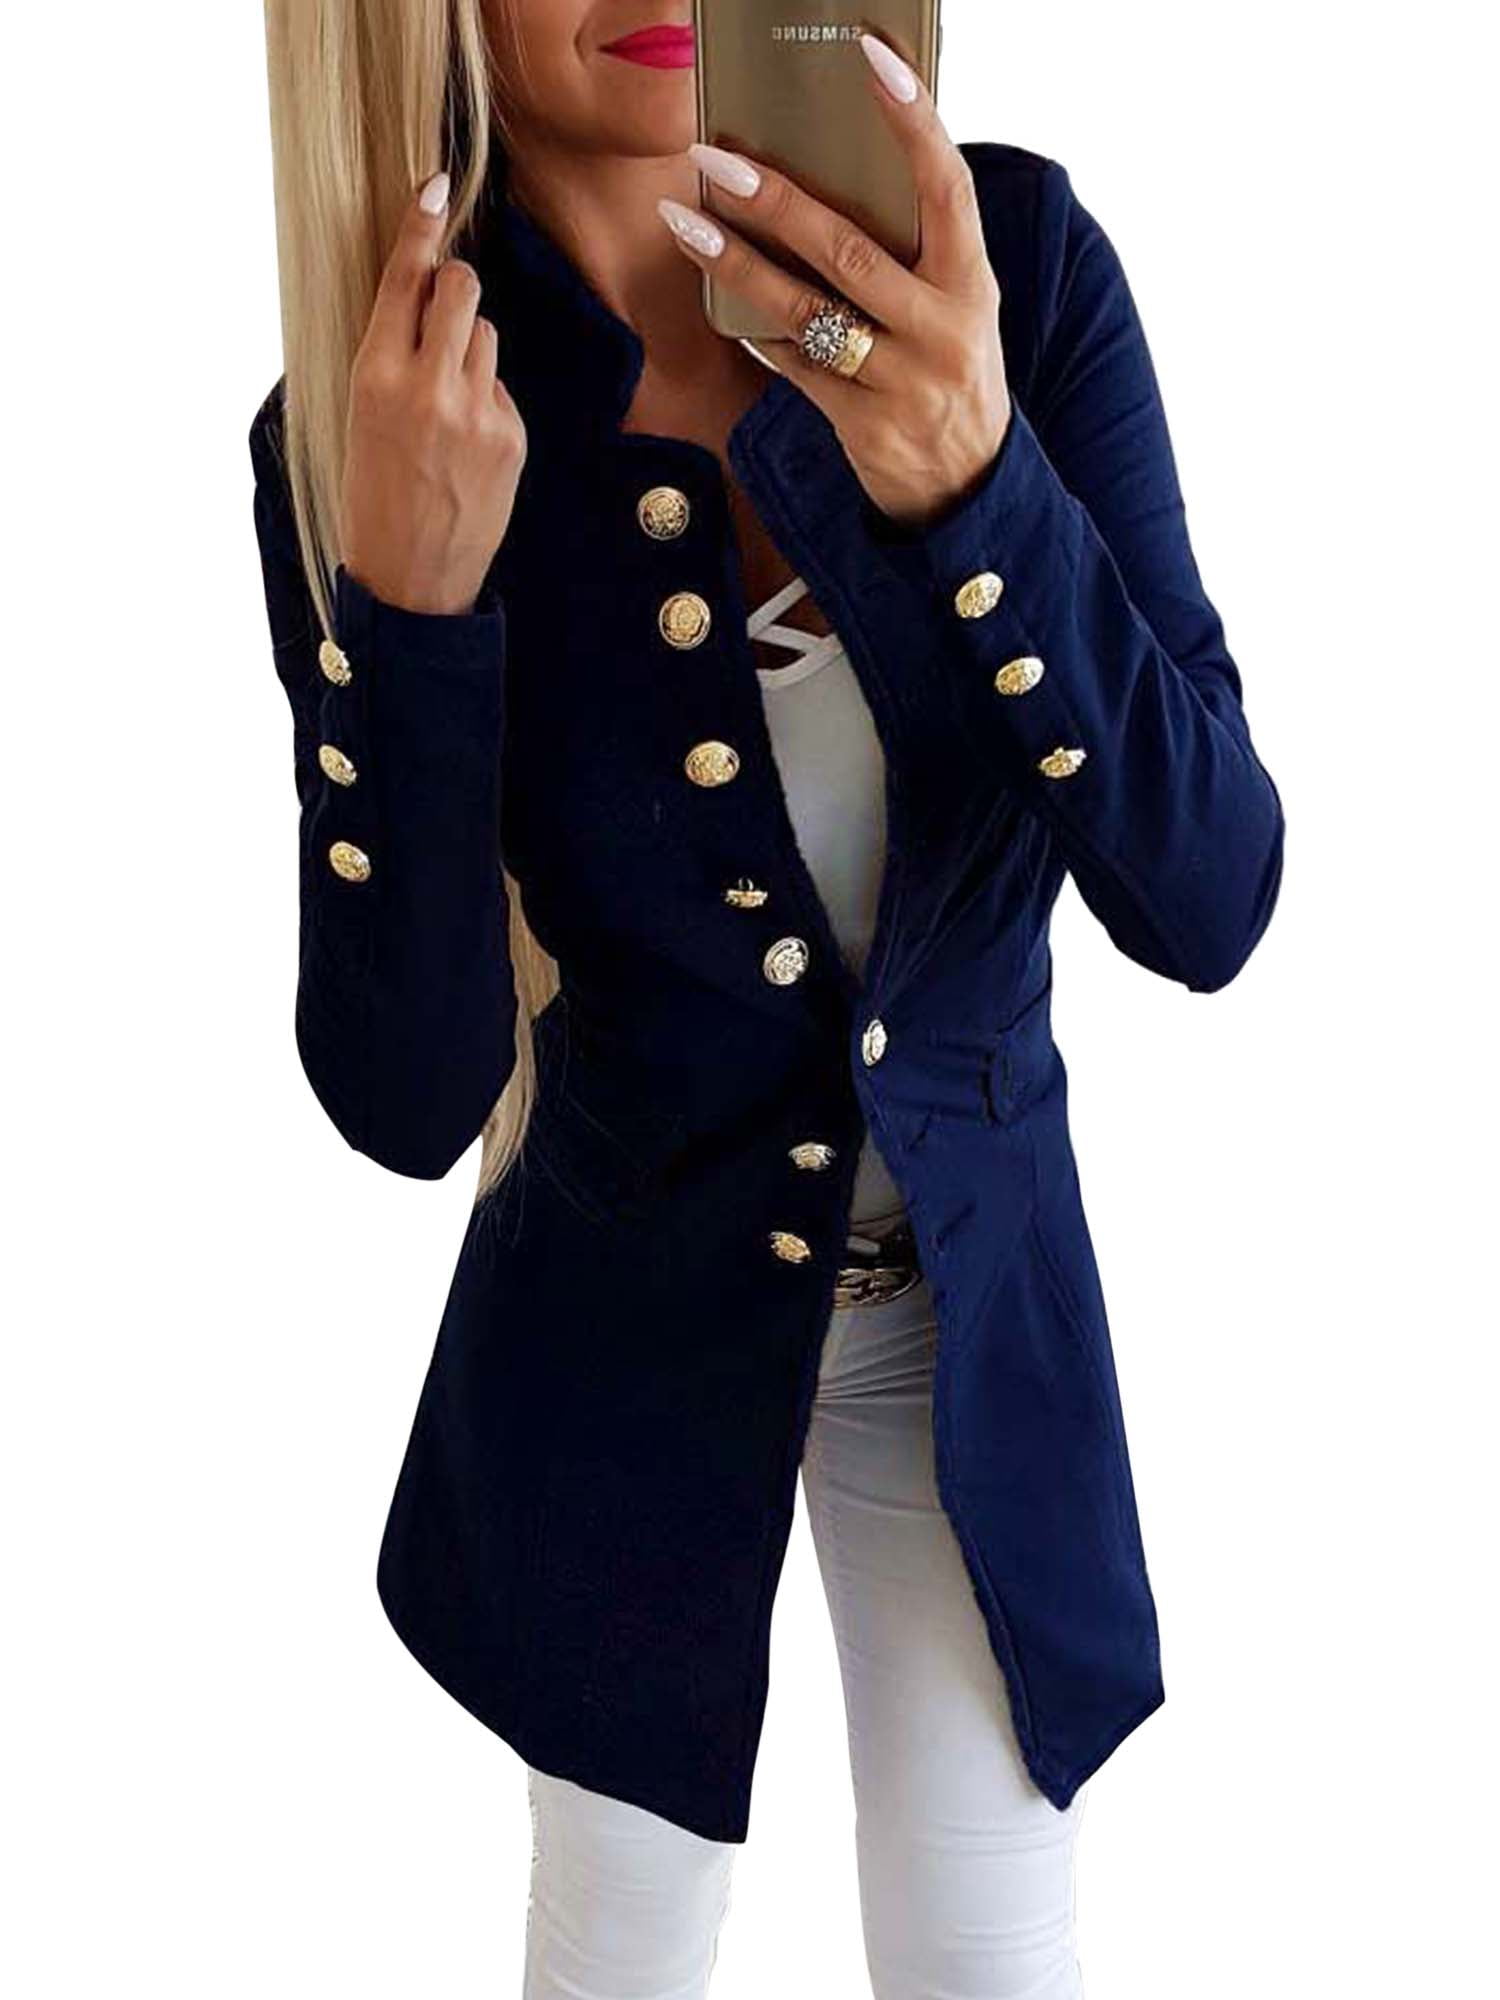 SELX Women Fashion Slim Lapel PU Leather Business Work Blazer Jacket Suit Coat 